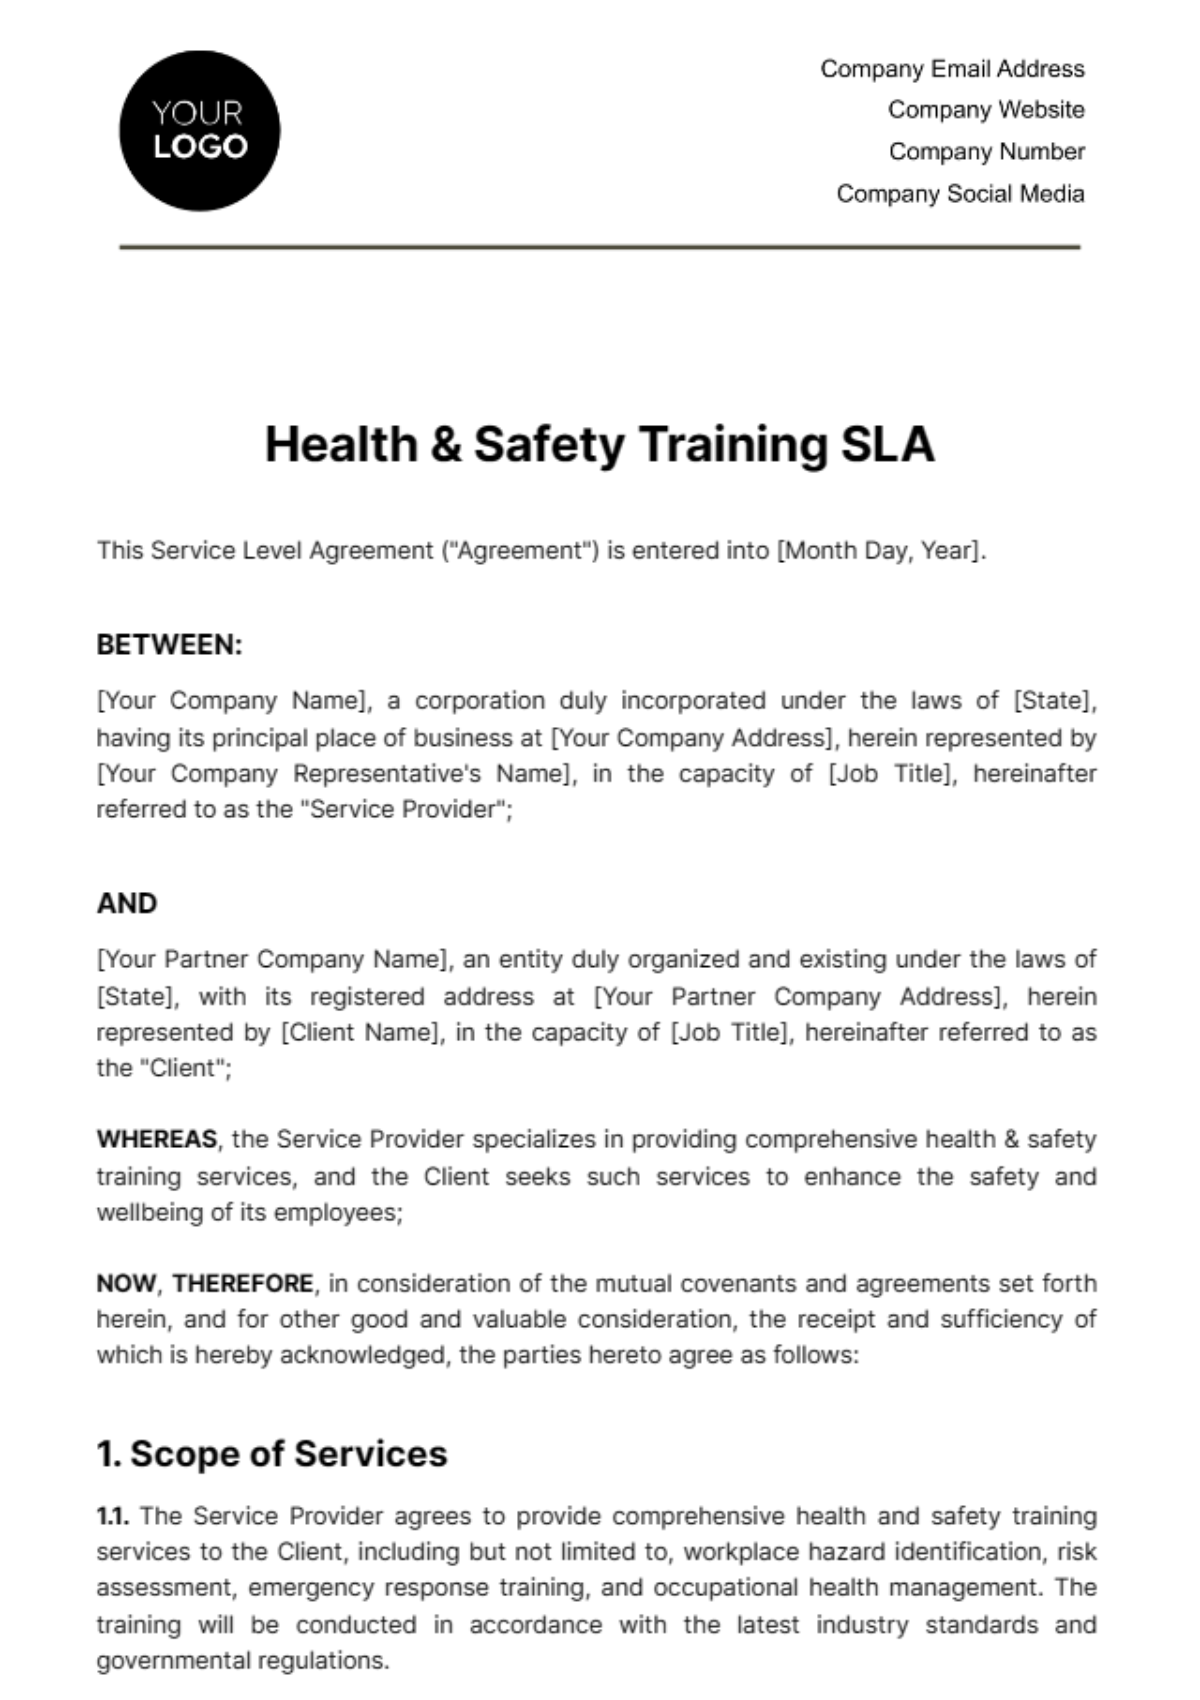 Health & Safety Training SLA Template